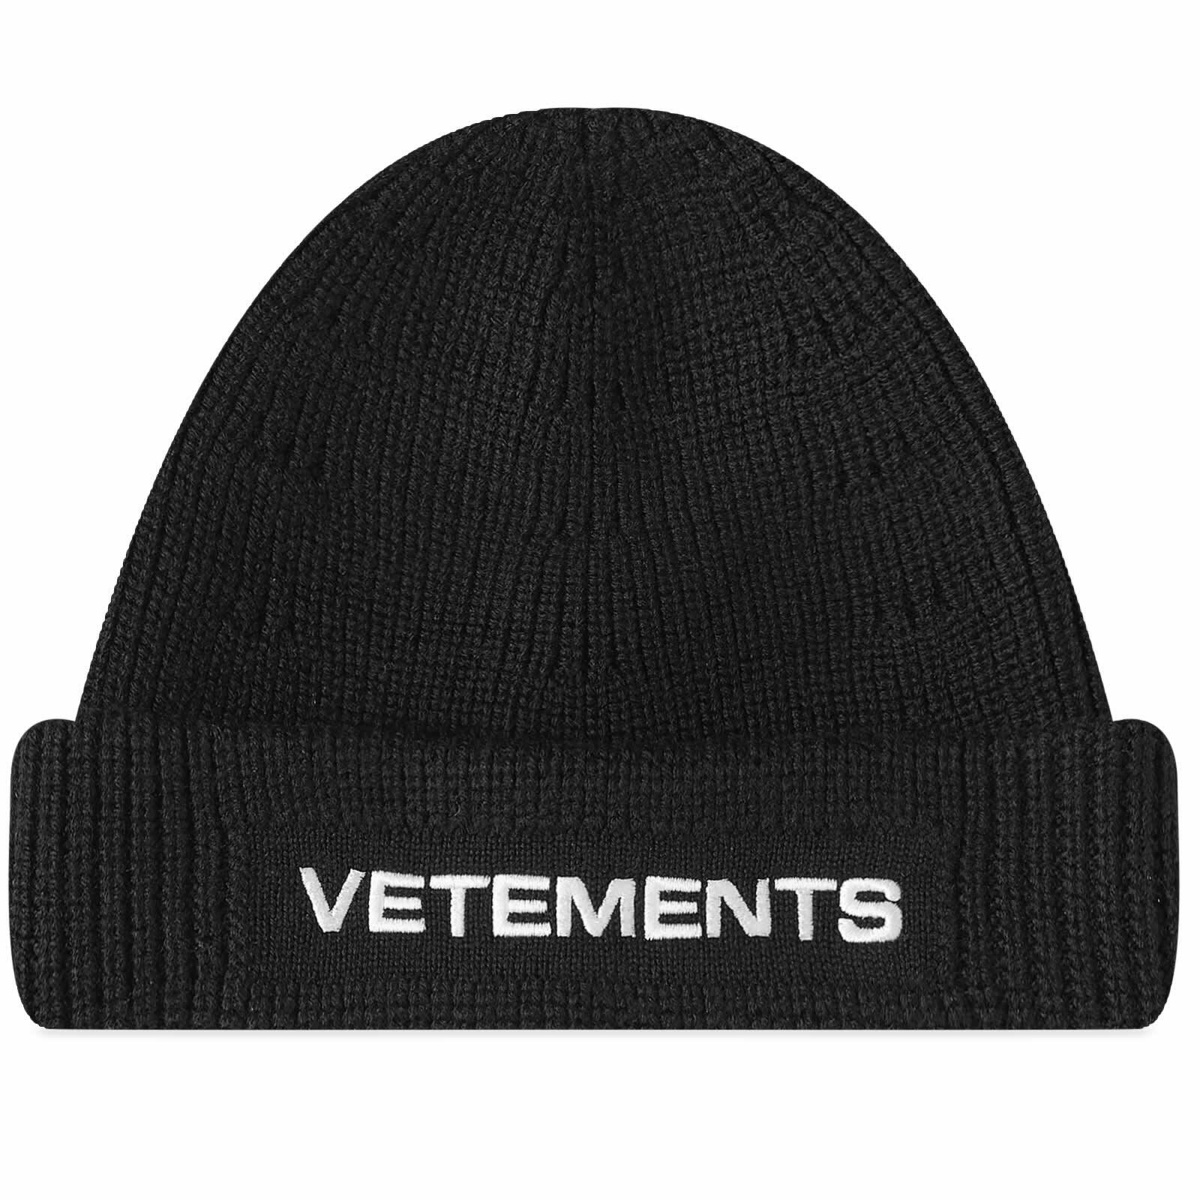 VETEMENTS Black 'Only Vetements' Cap Vetements